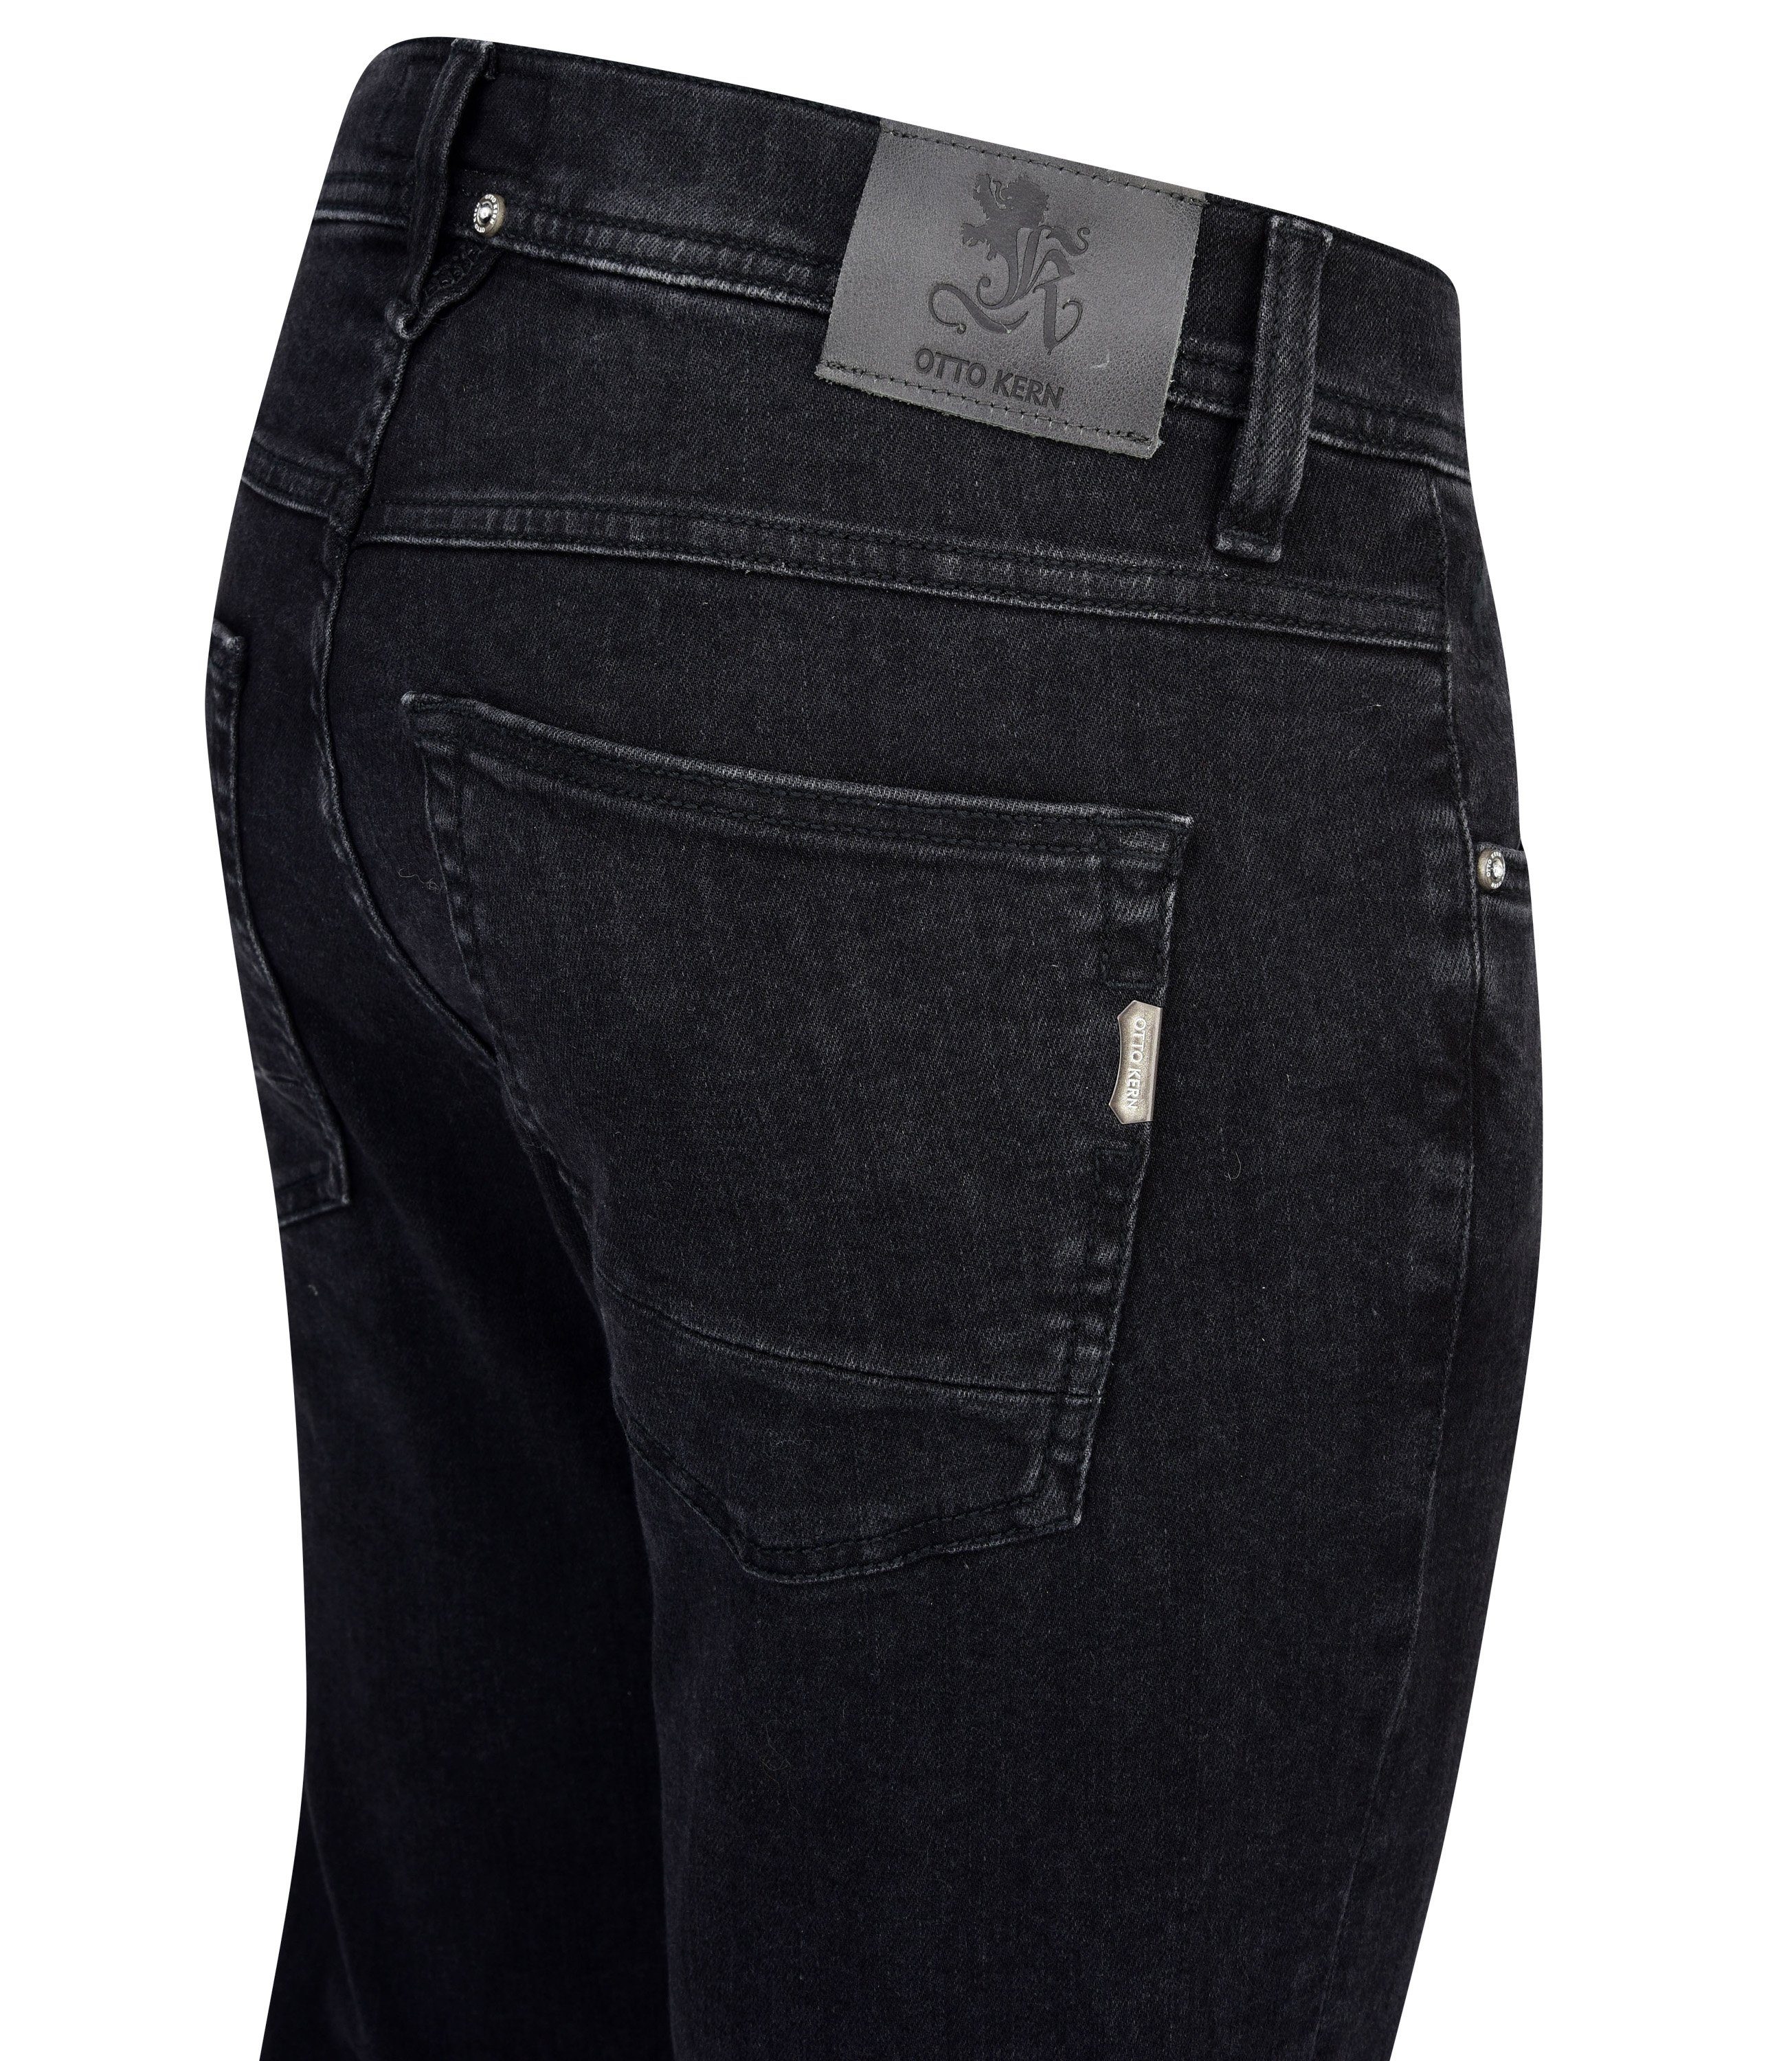 Kern 5-Pocket-Jeans OTTO JOHN black 67043 KERN stonewash 6812.9801 black